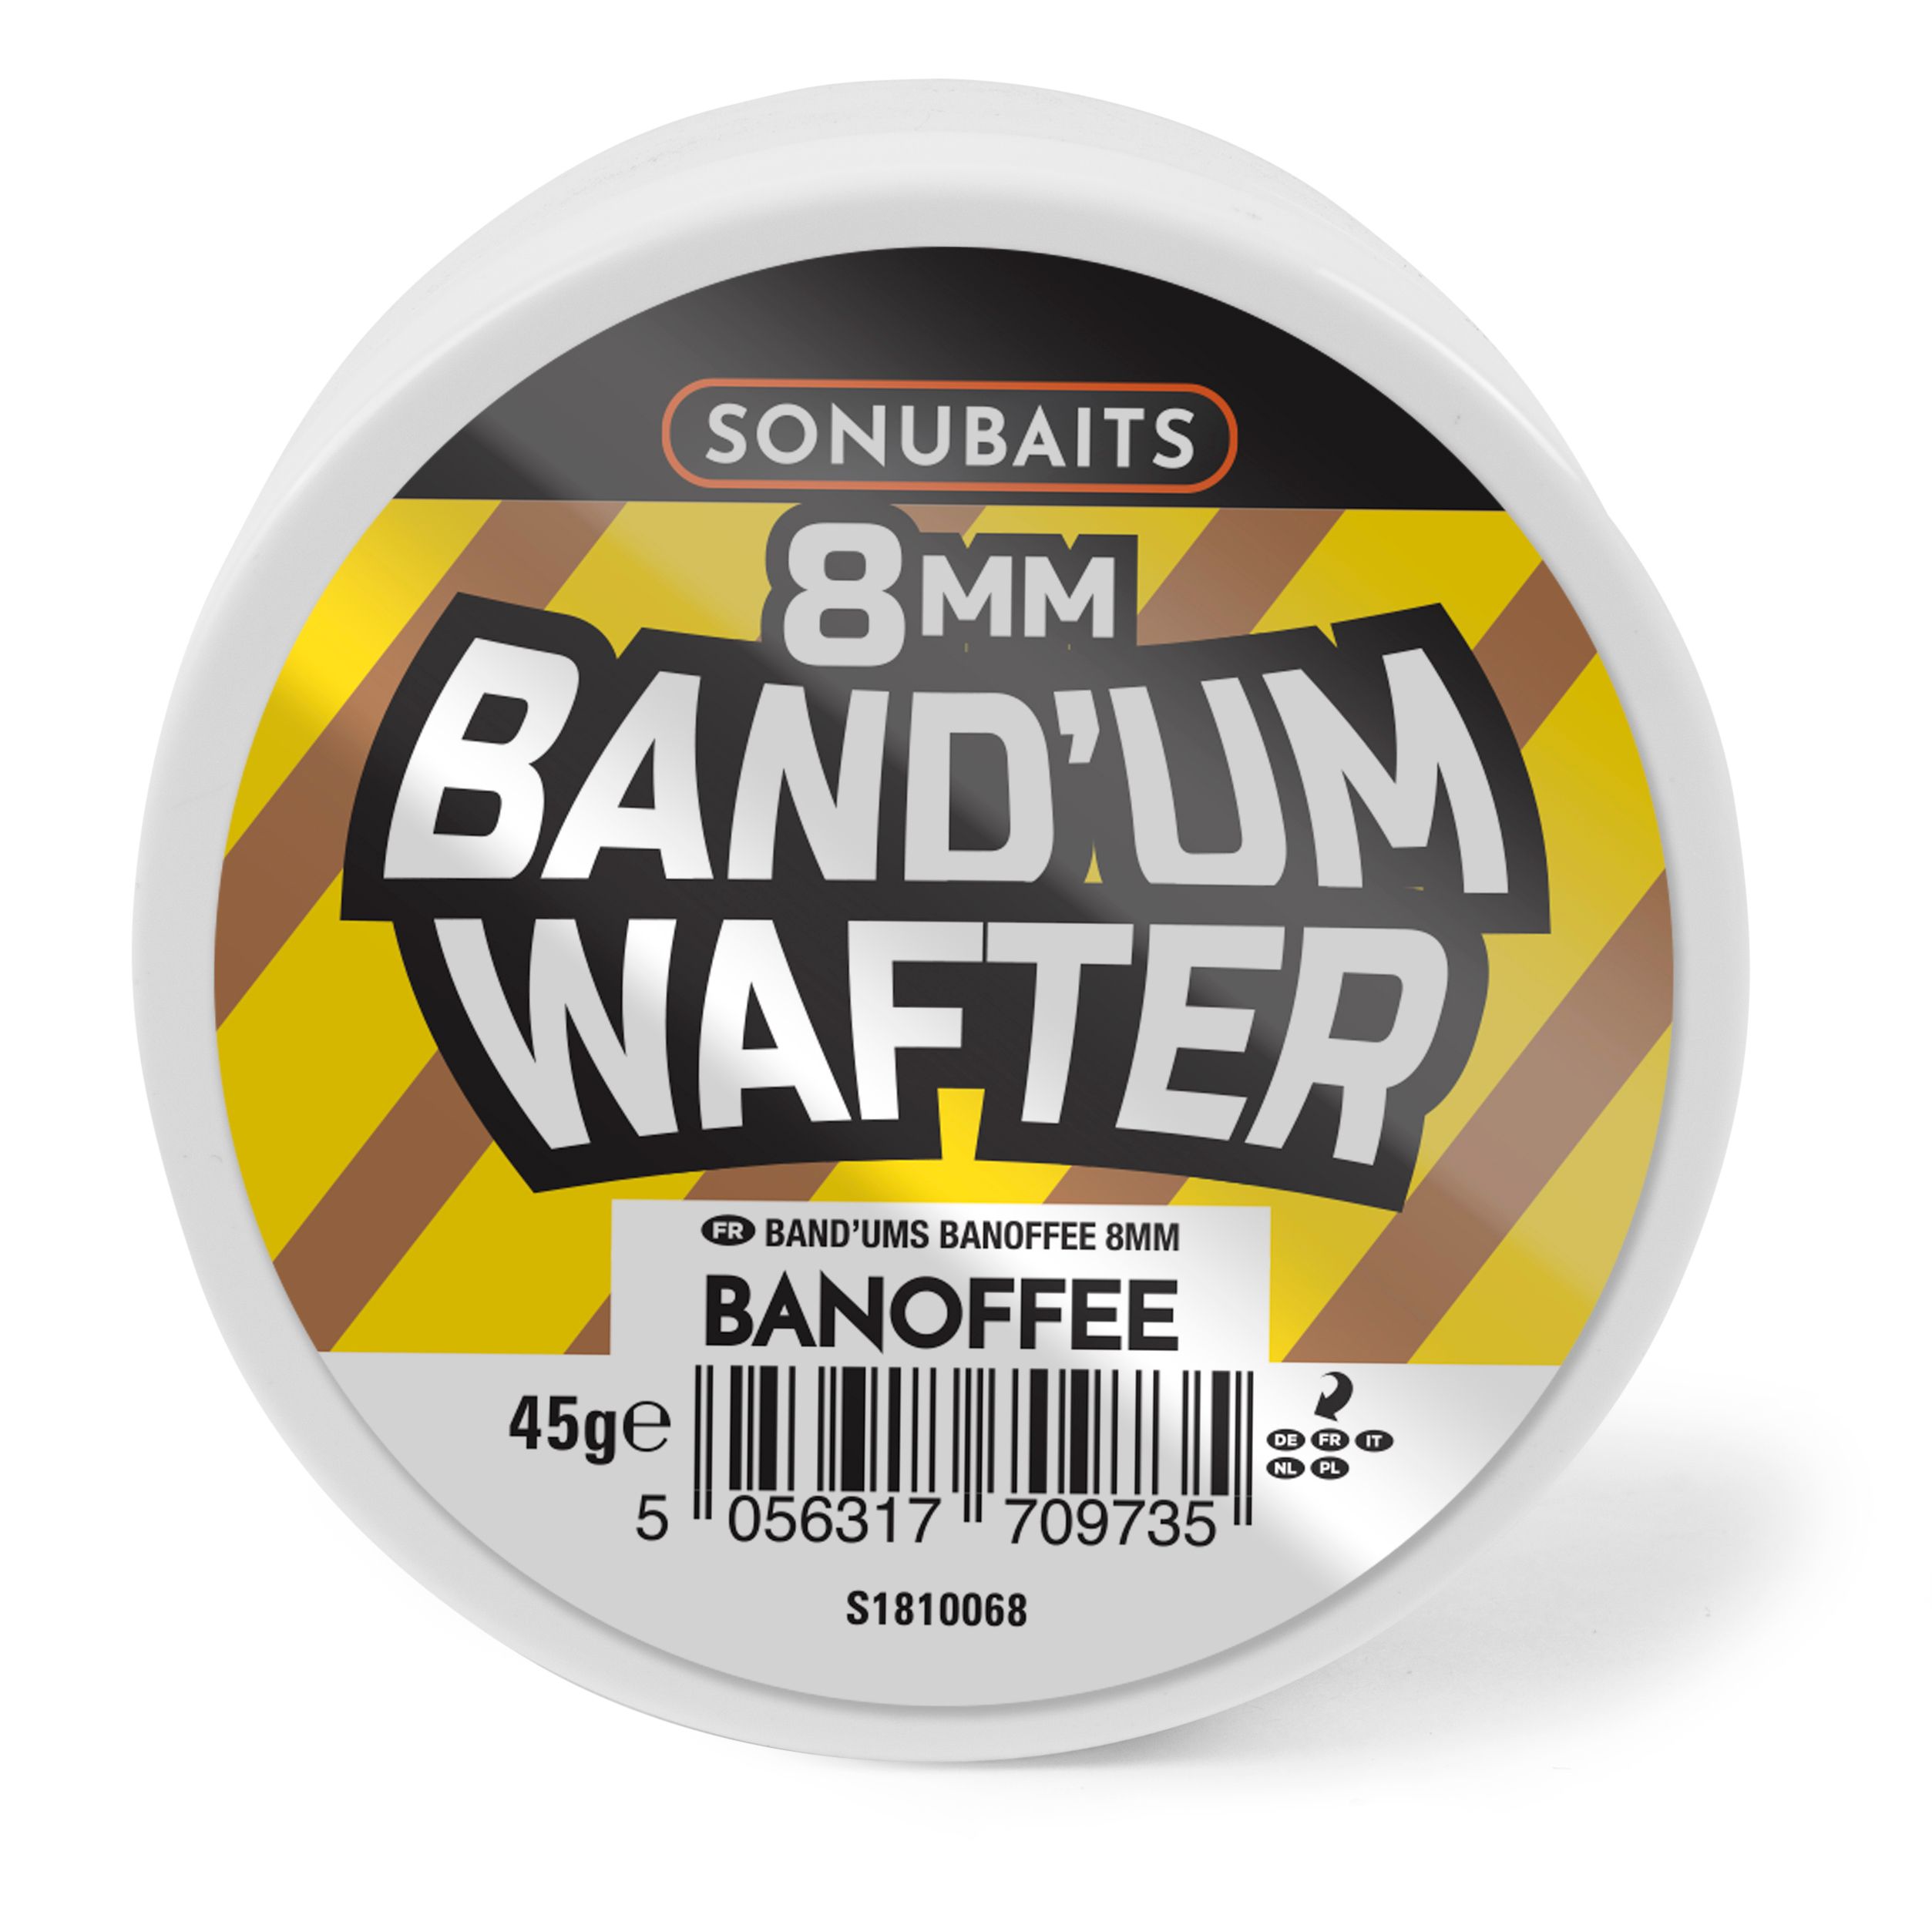 Sonubaits Band'um Wafters Banoffee 8mm